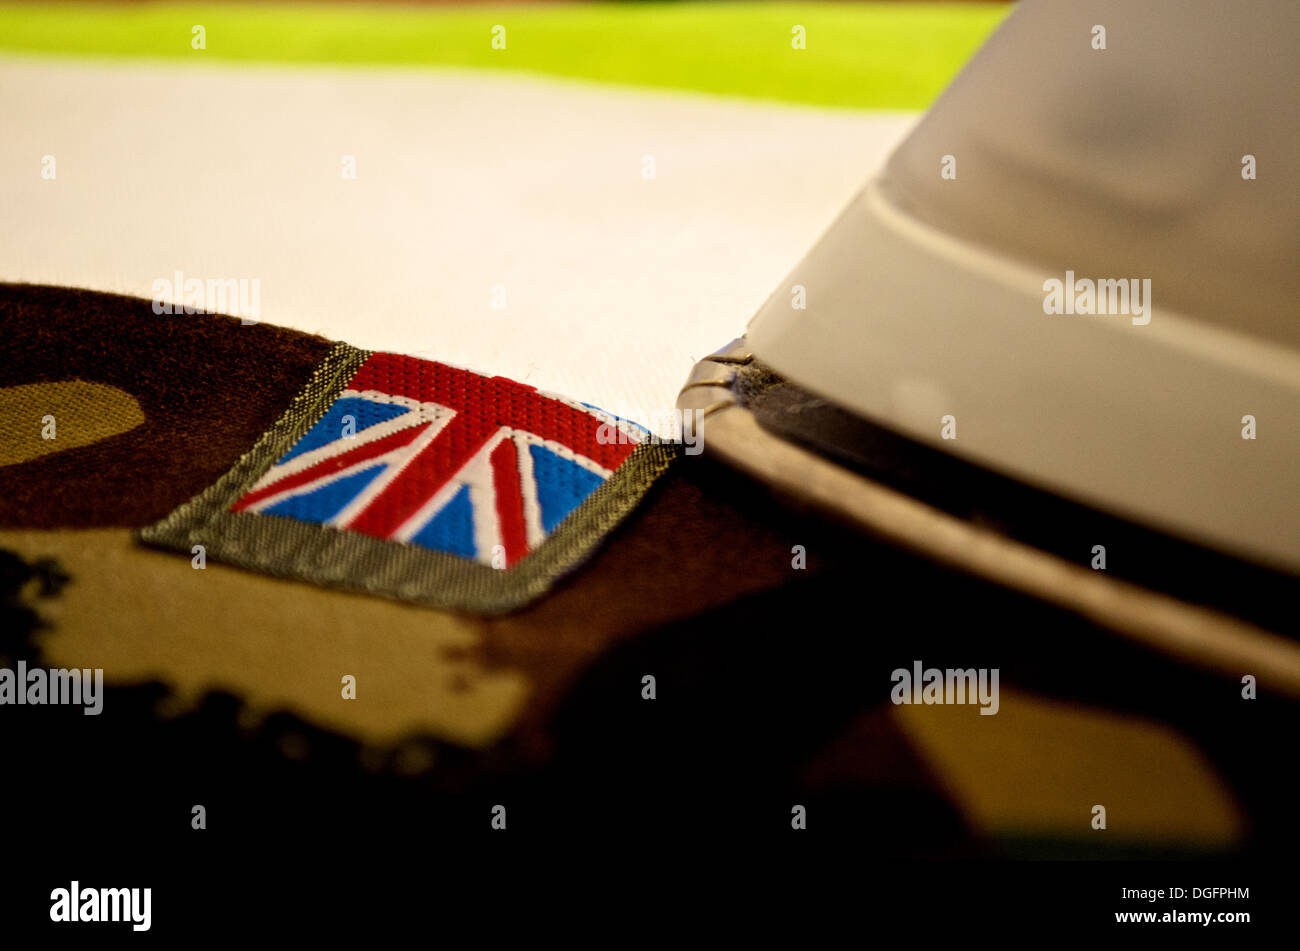 British military uniform camouflage with Union Jack flag being ironed Stock Photo